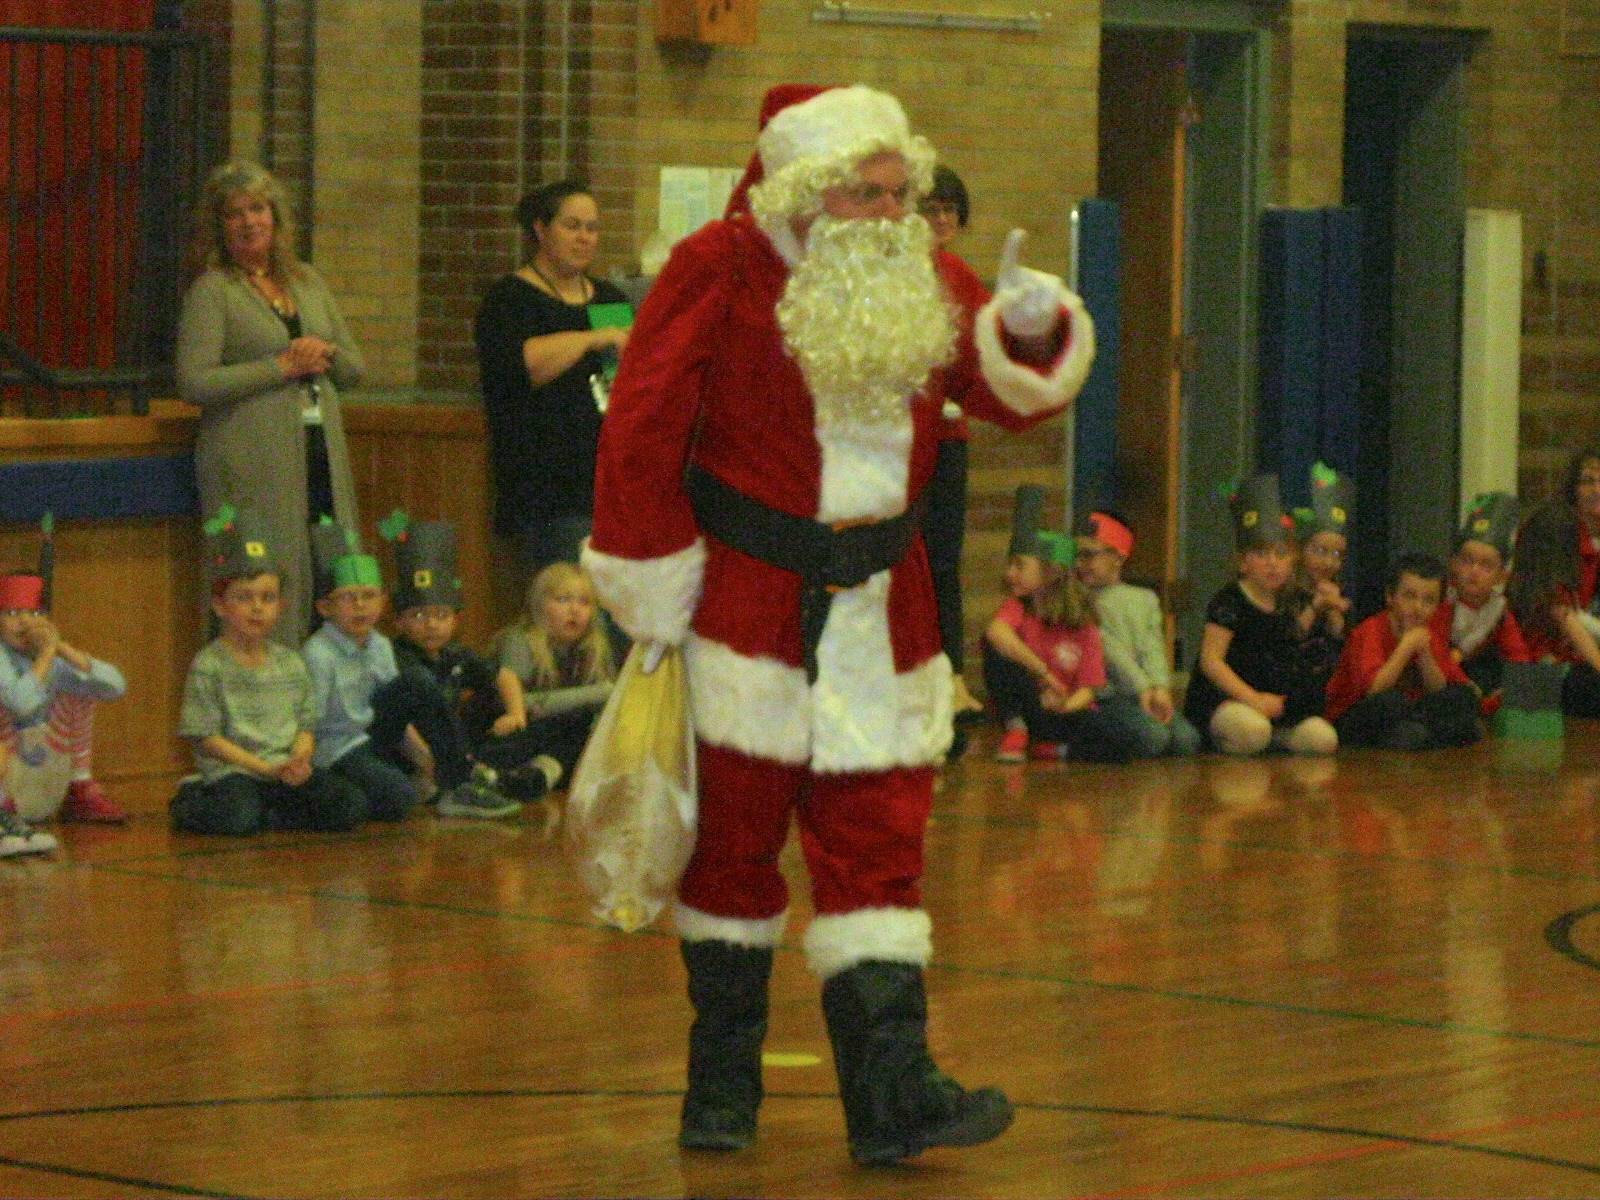 Santa arrives to sing a long!